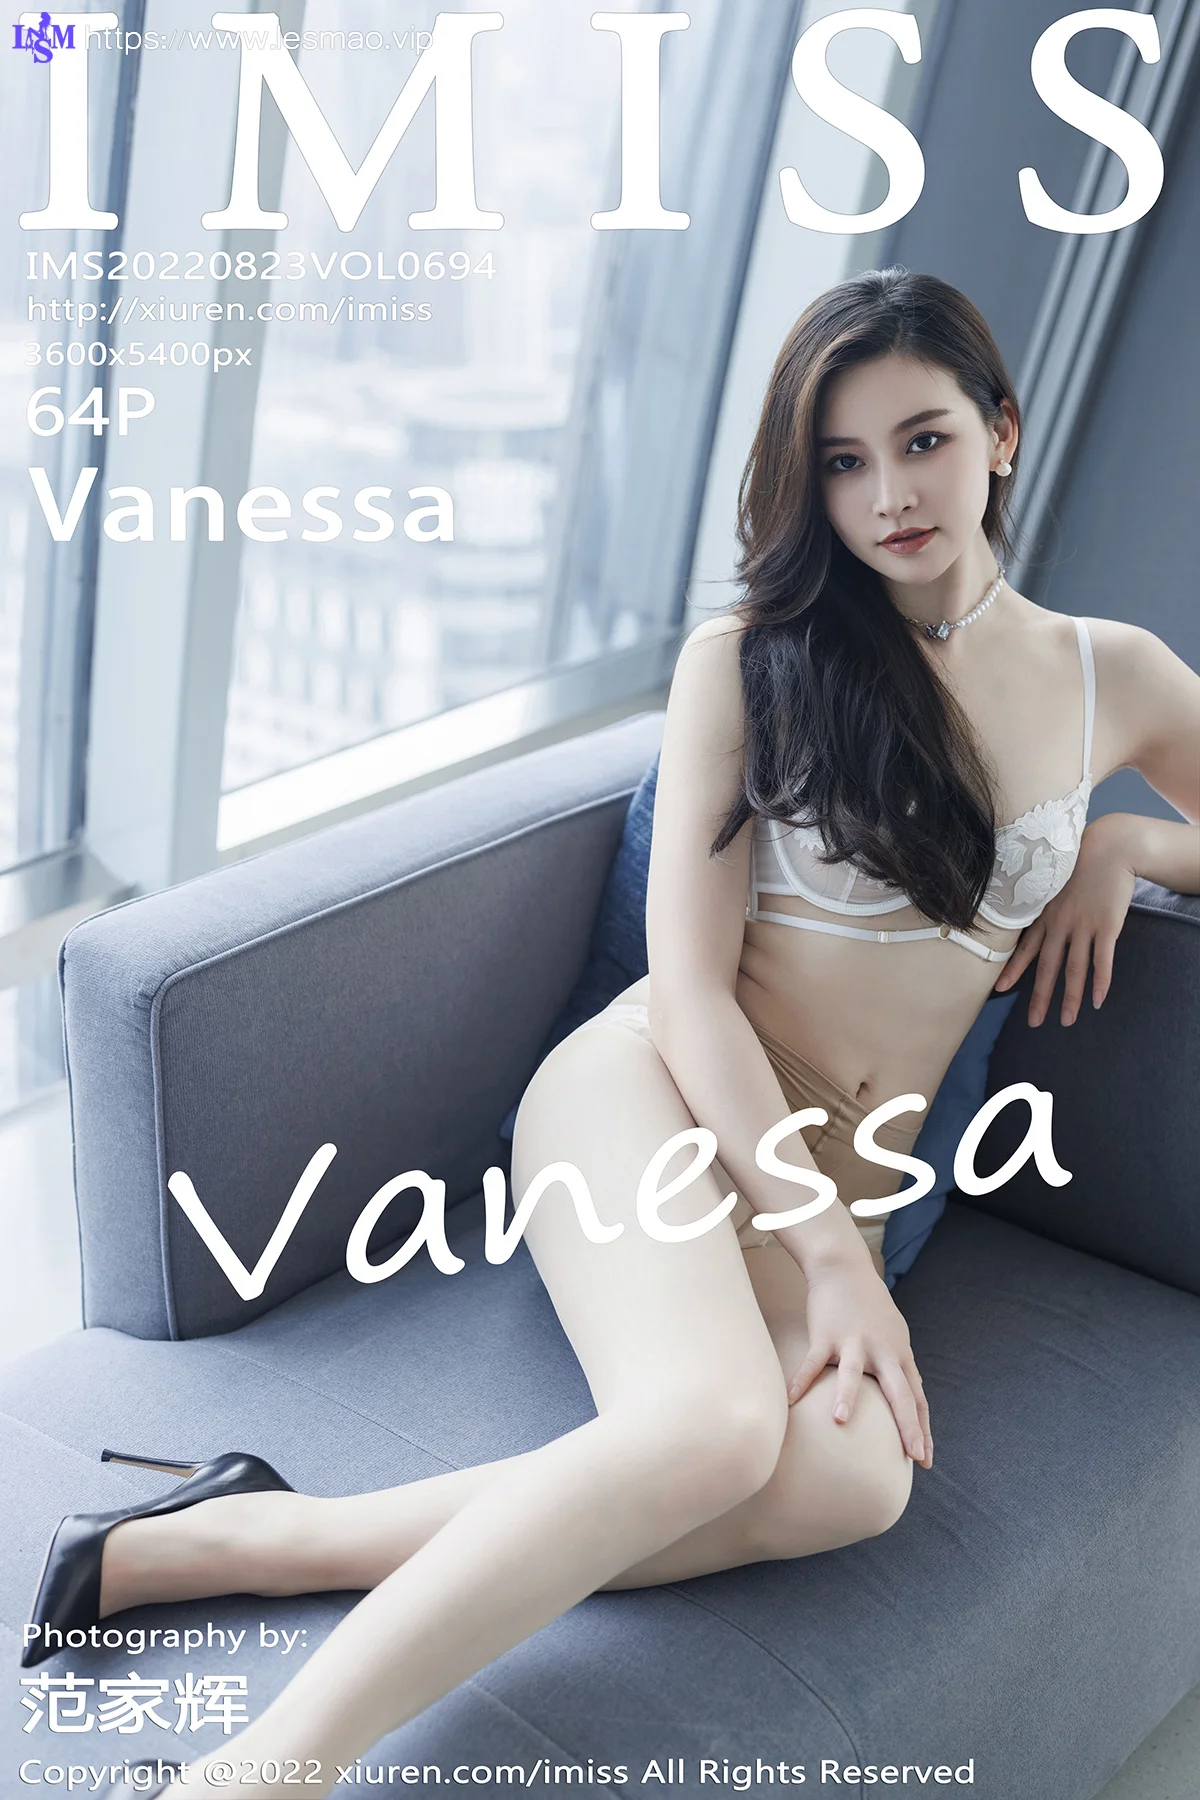 IMiss 爱蜜社 Vol.694 气质美女 Vanessa 性感写真 - 1